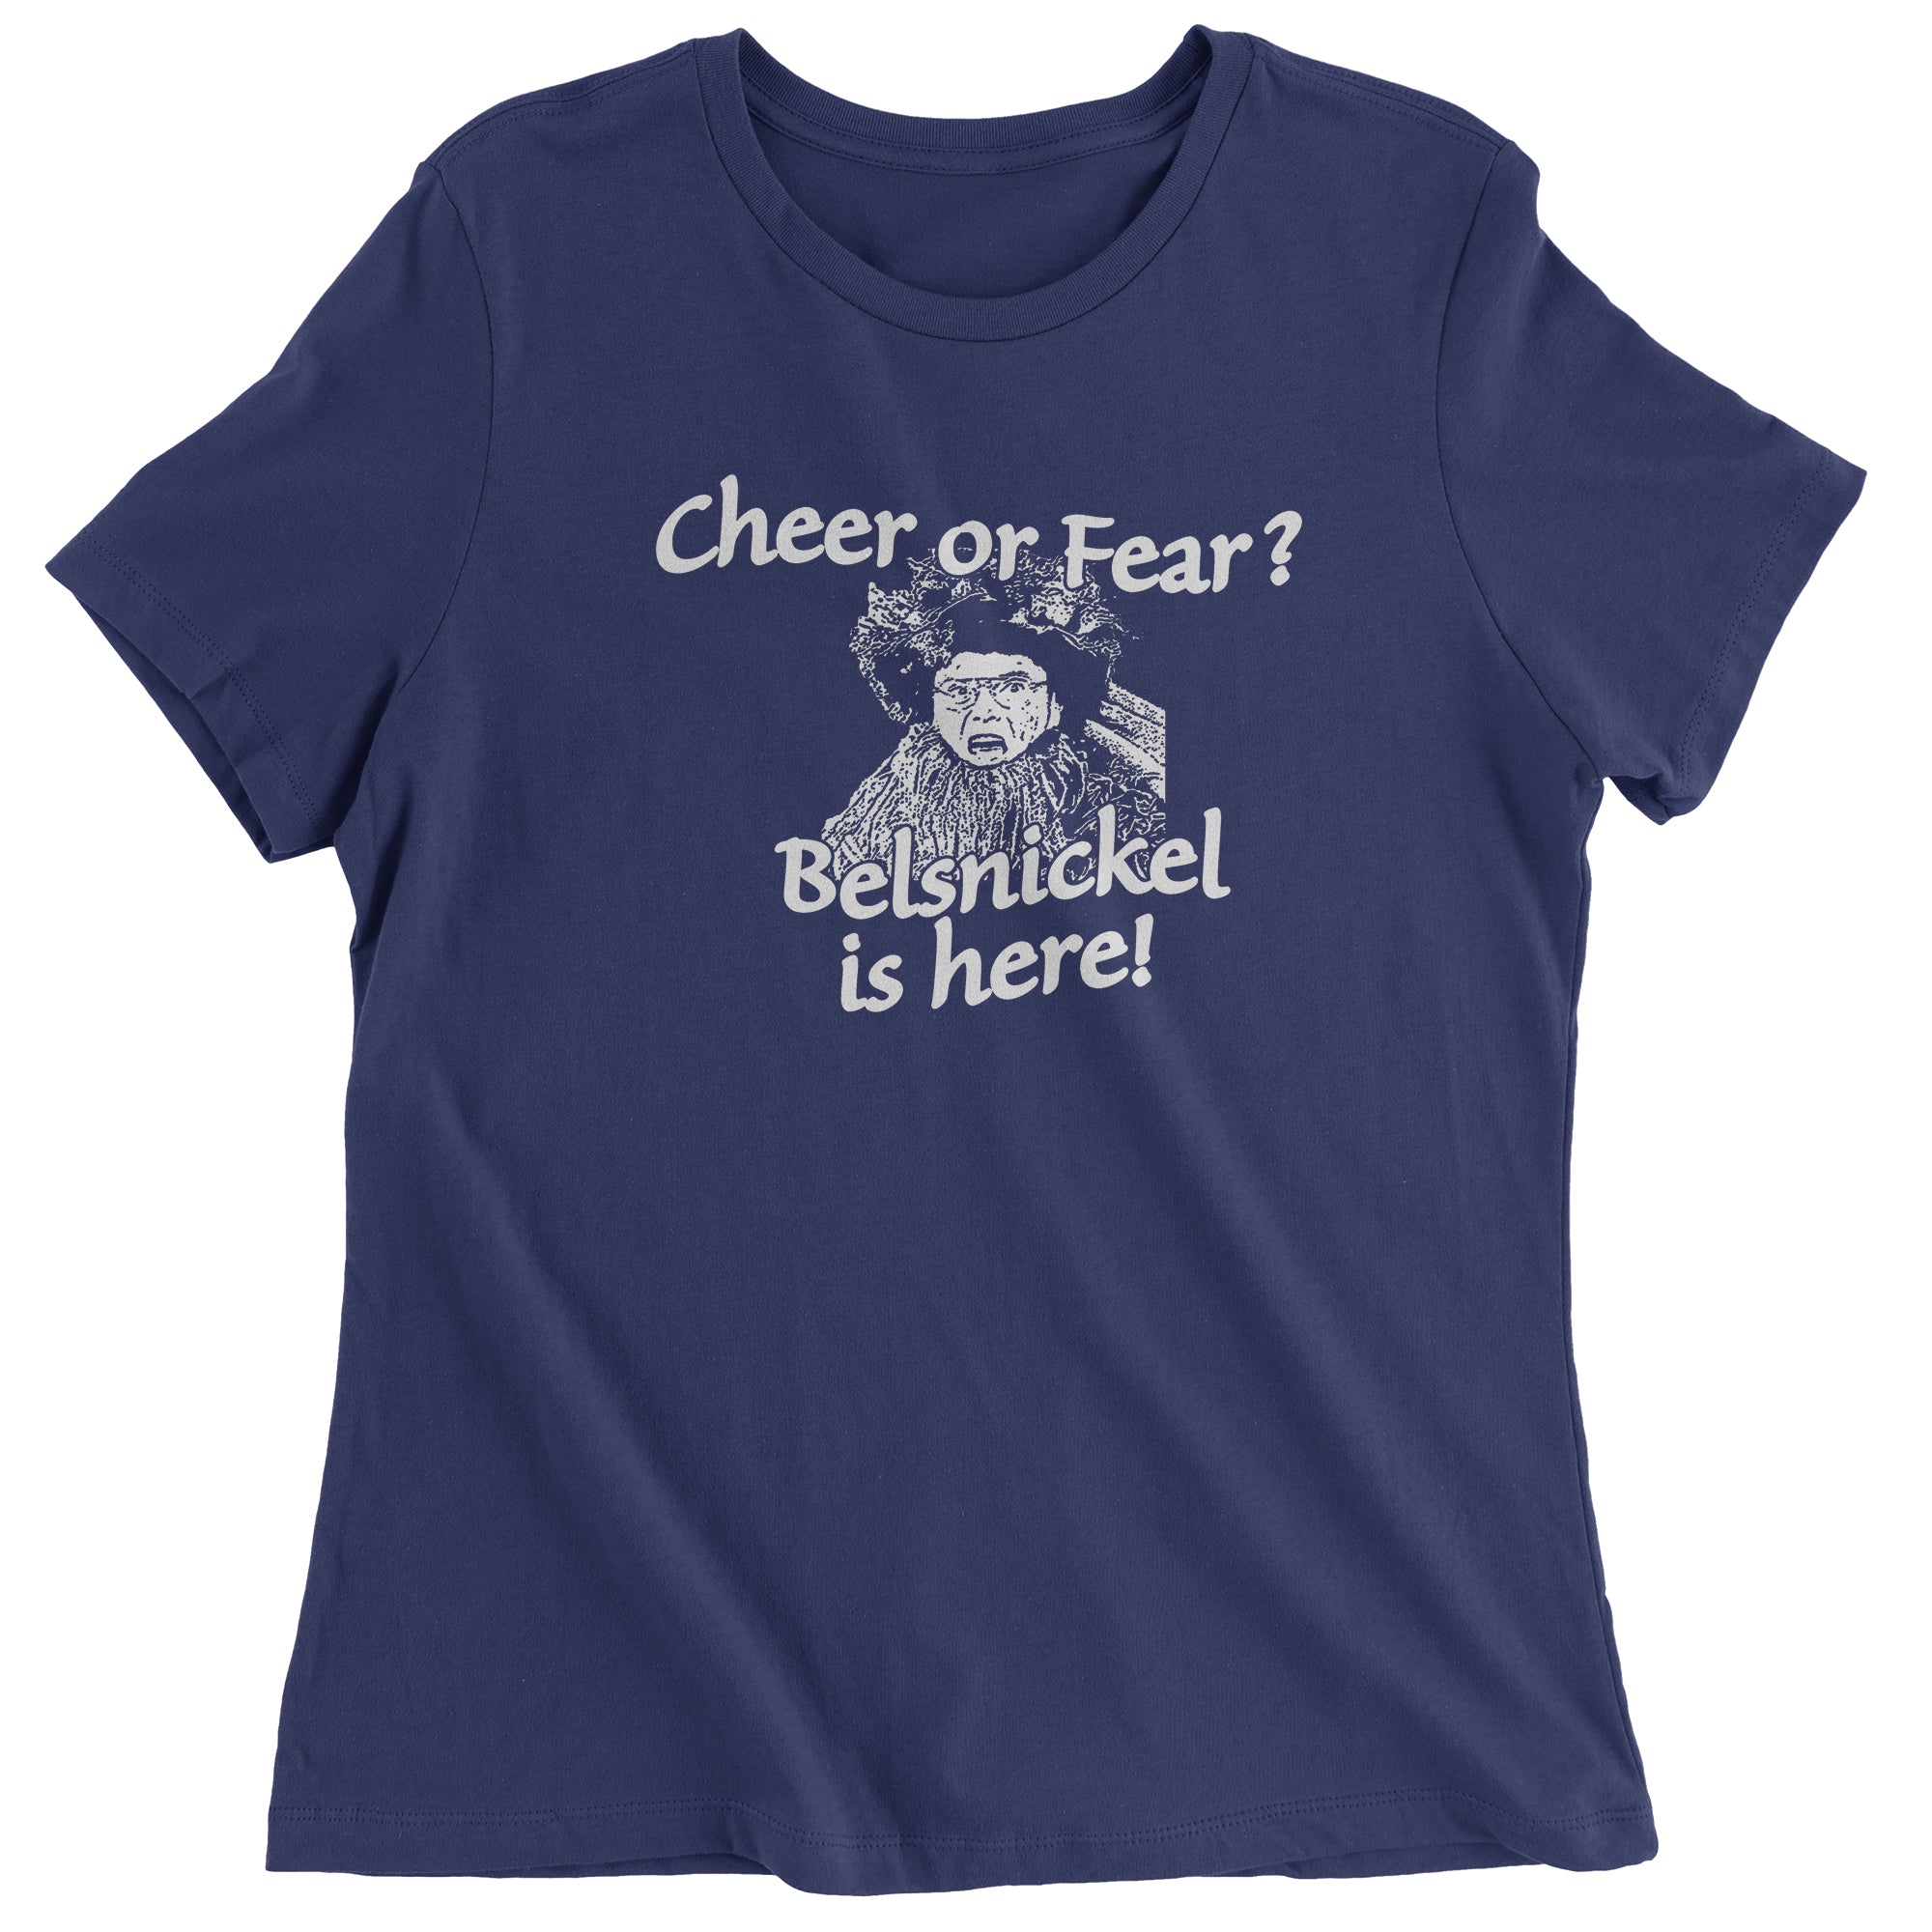 Belsnickel Cheer or Fear Women's T-Shirt